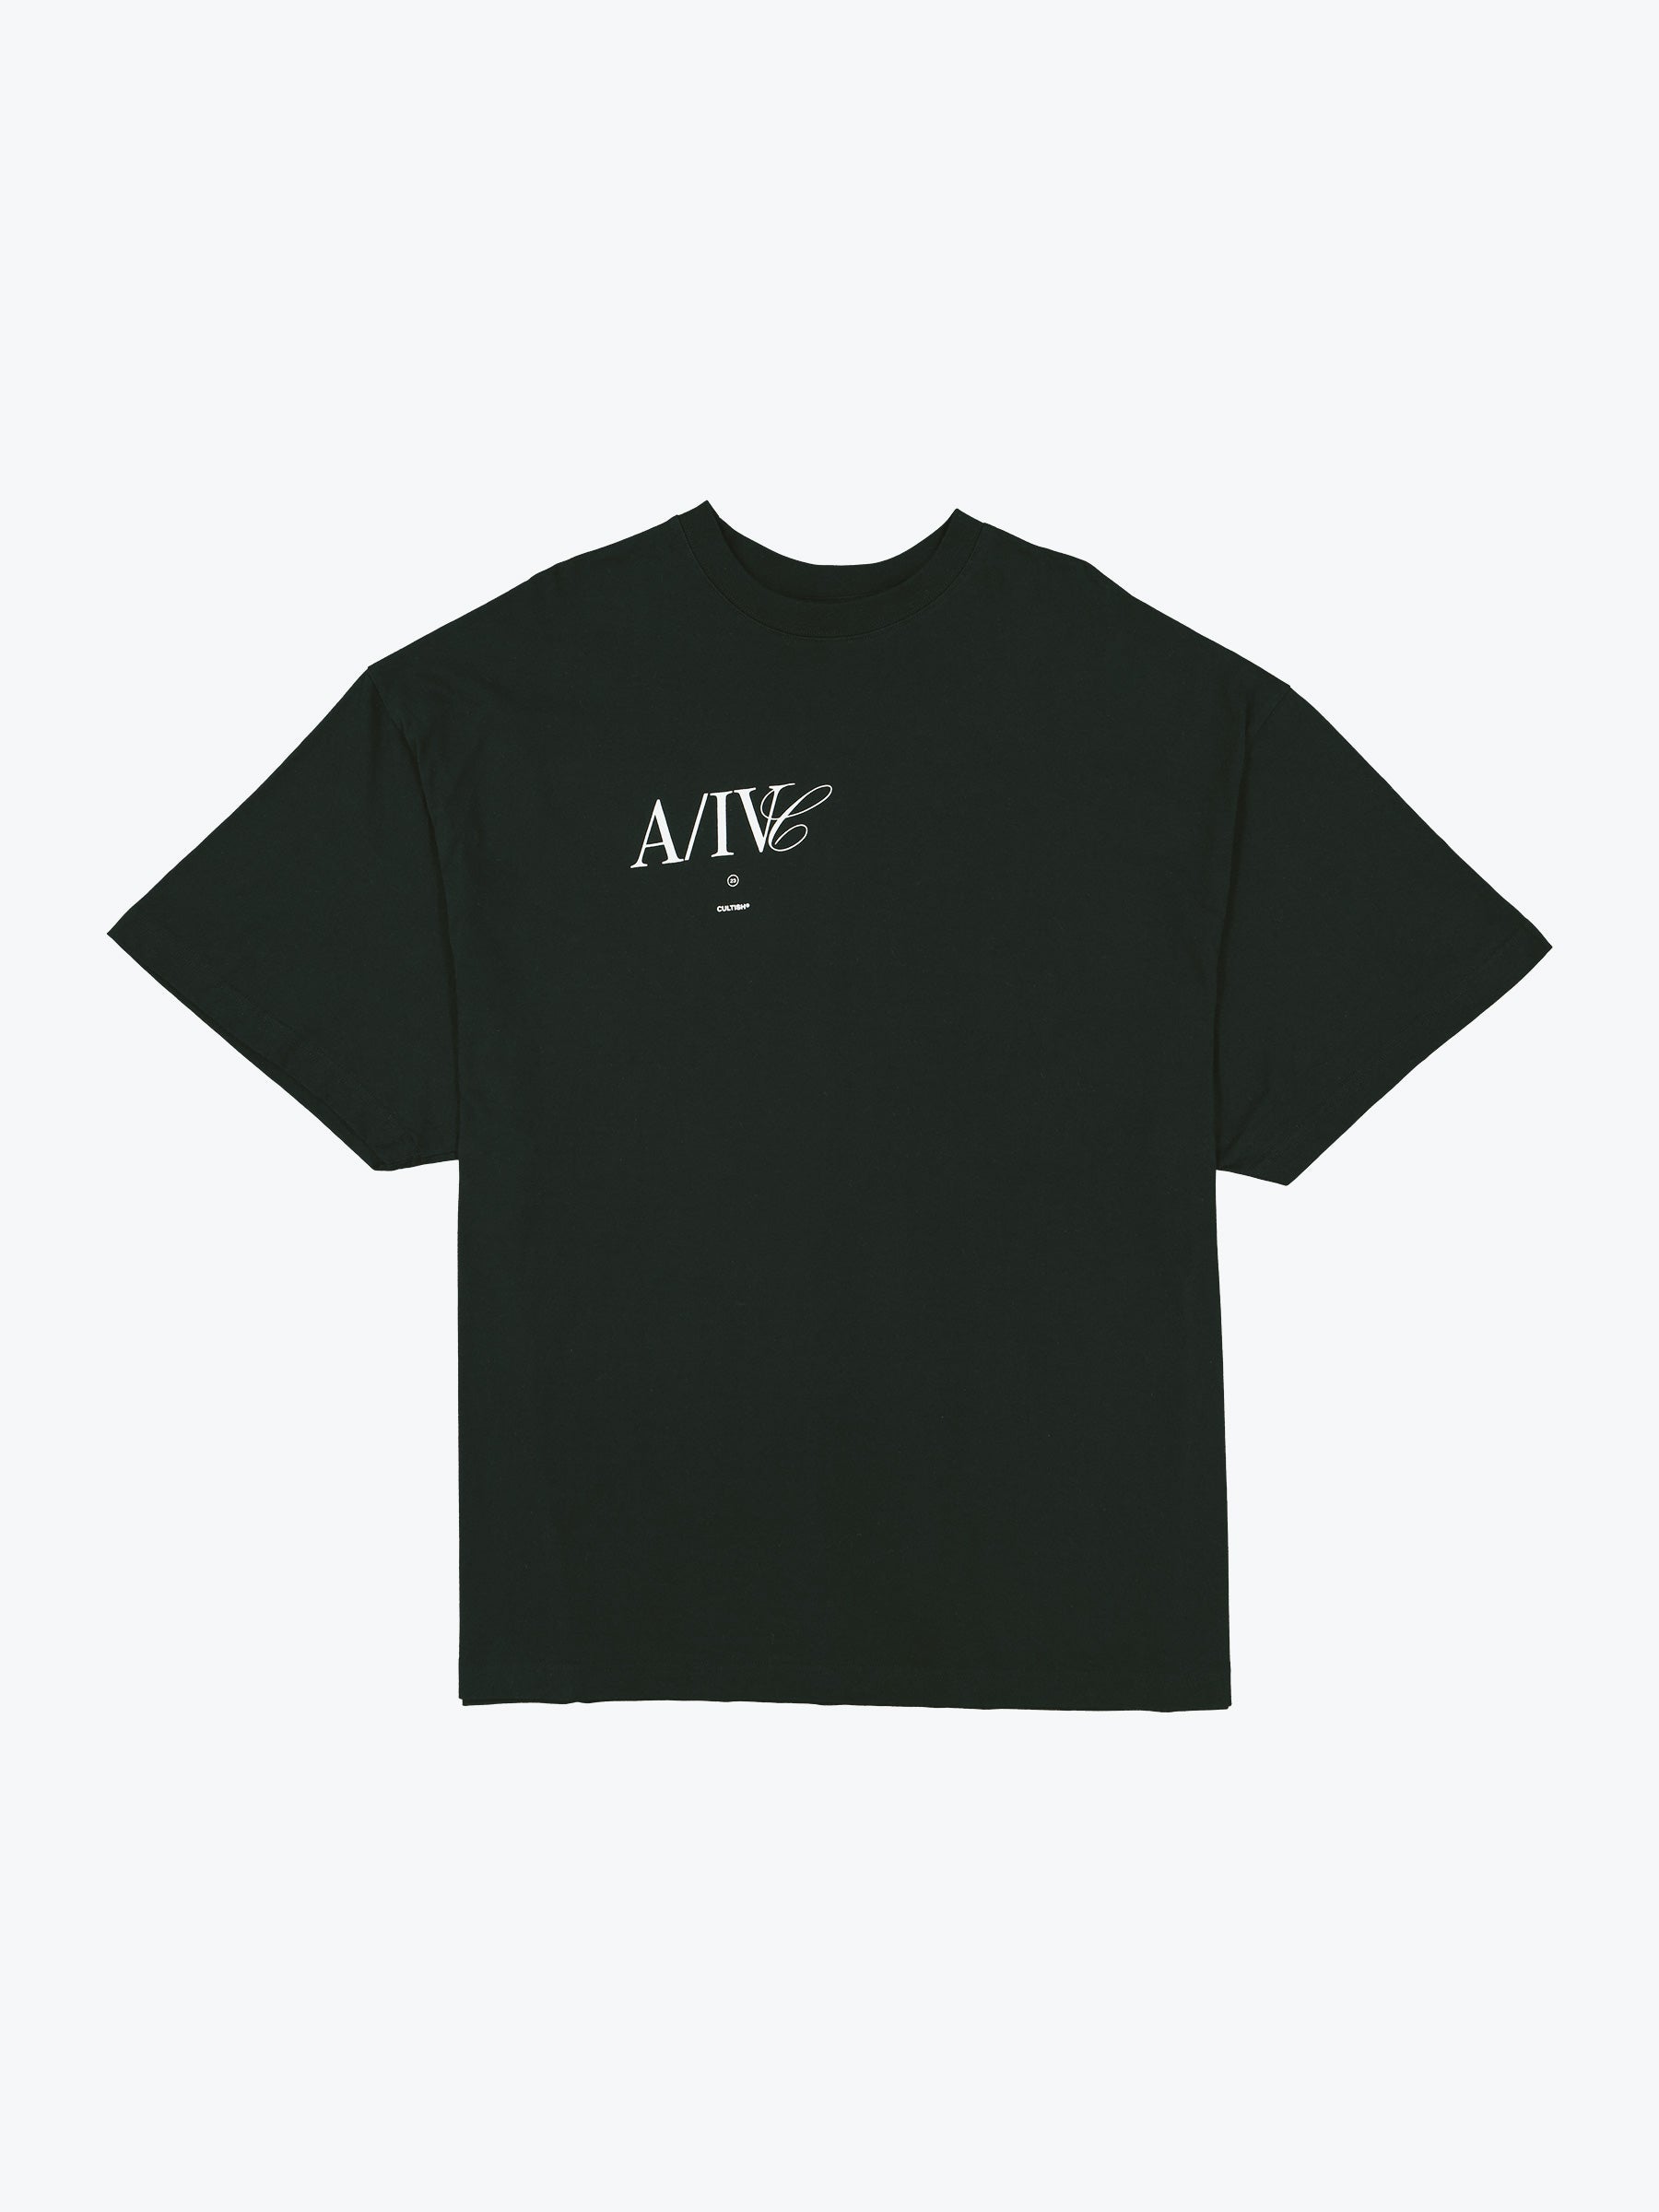 Black A/IV Oversized T-Shirt